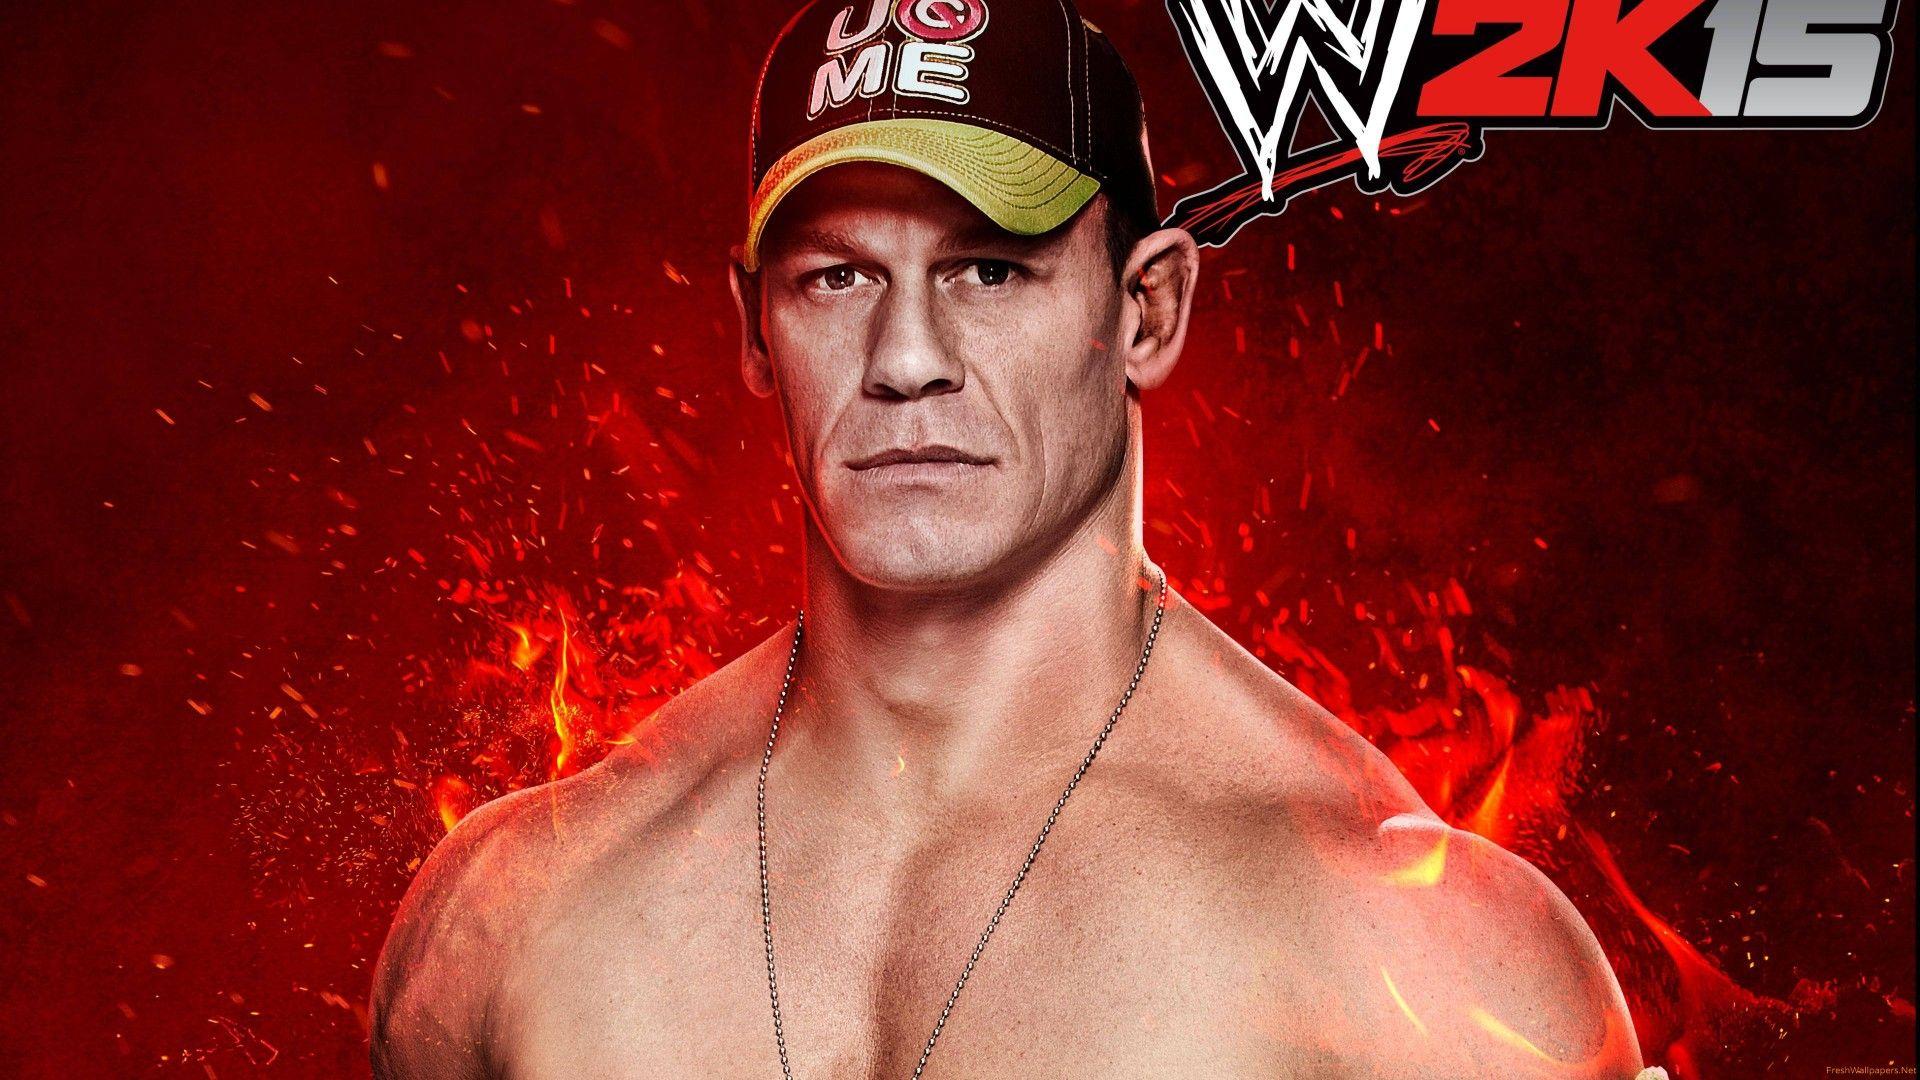 WWE 2015 John Cena wallpaper